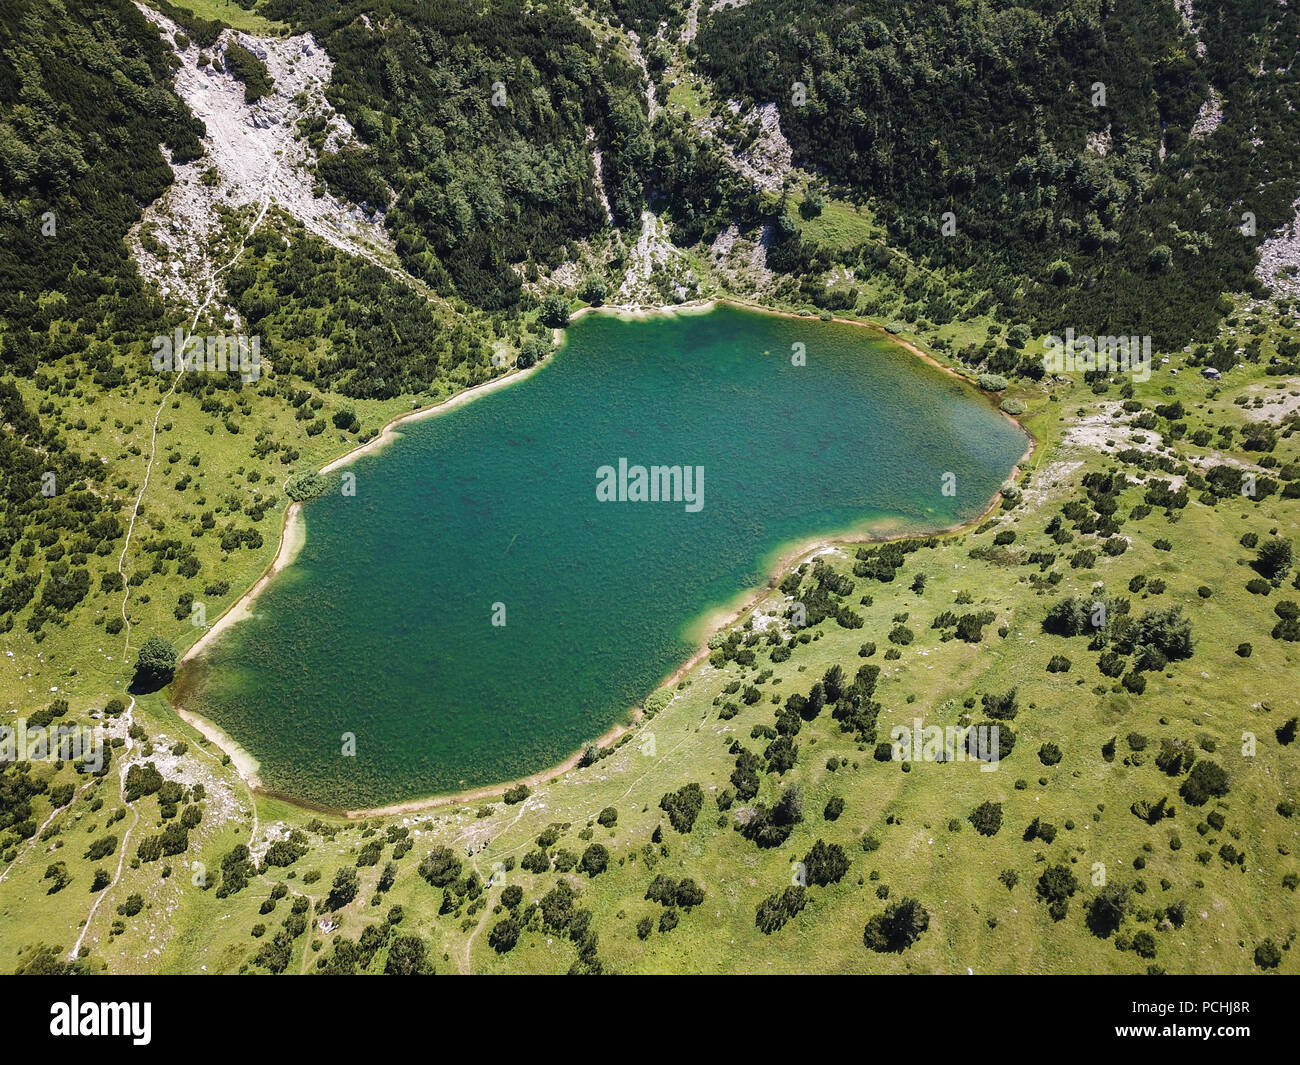 Šator Mountain (Šator planina) è nelle Alpi Dinariche, in Bosnia ed Erzegovina. Appena al di sotto del picco, il lago Šator (Šatorsko jezero) è posizionato. Foto Stock